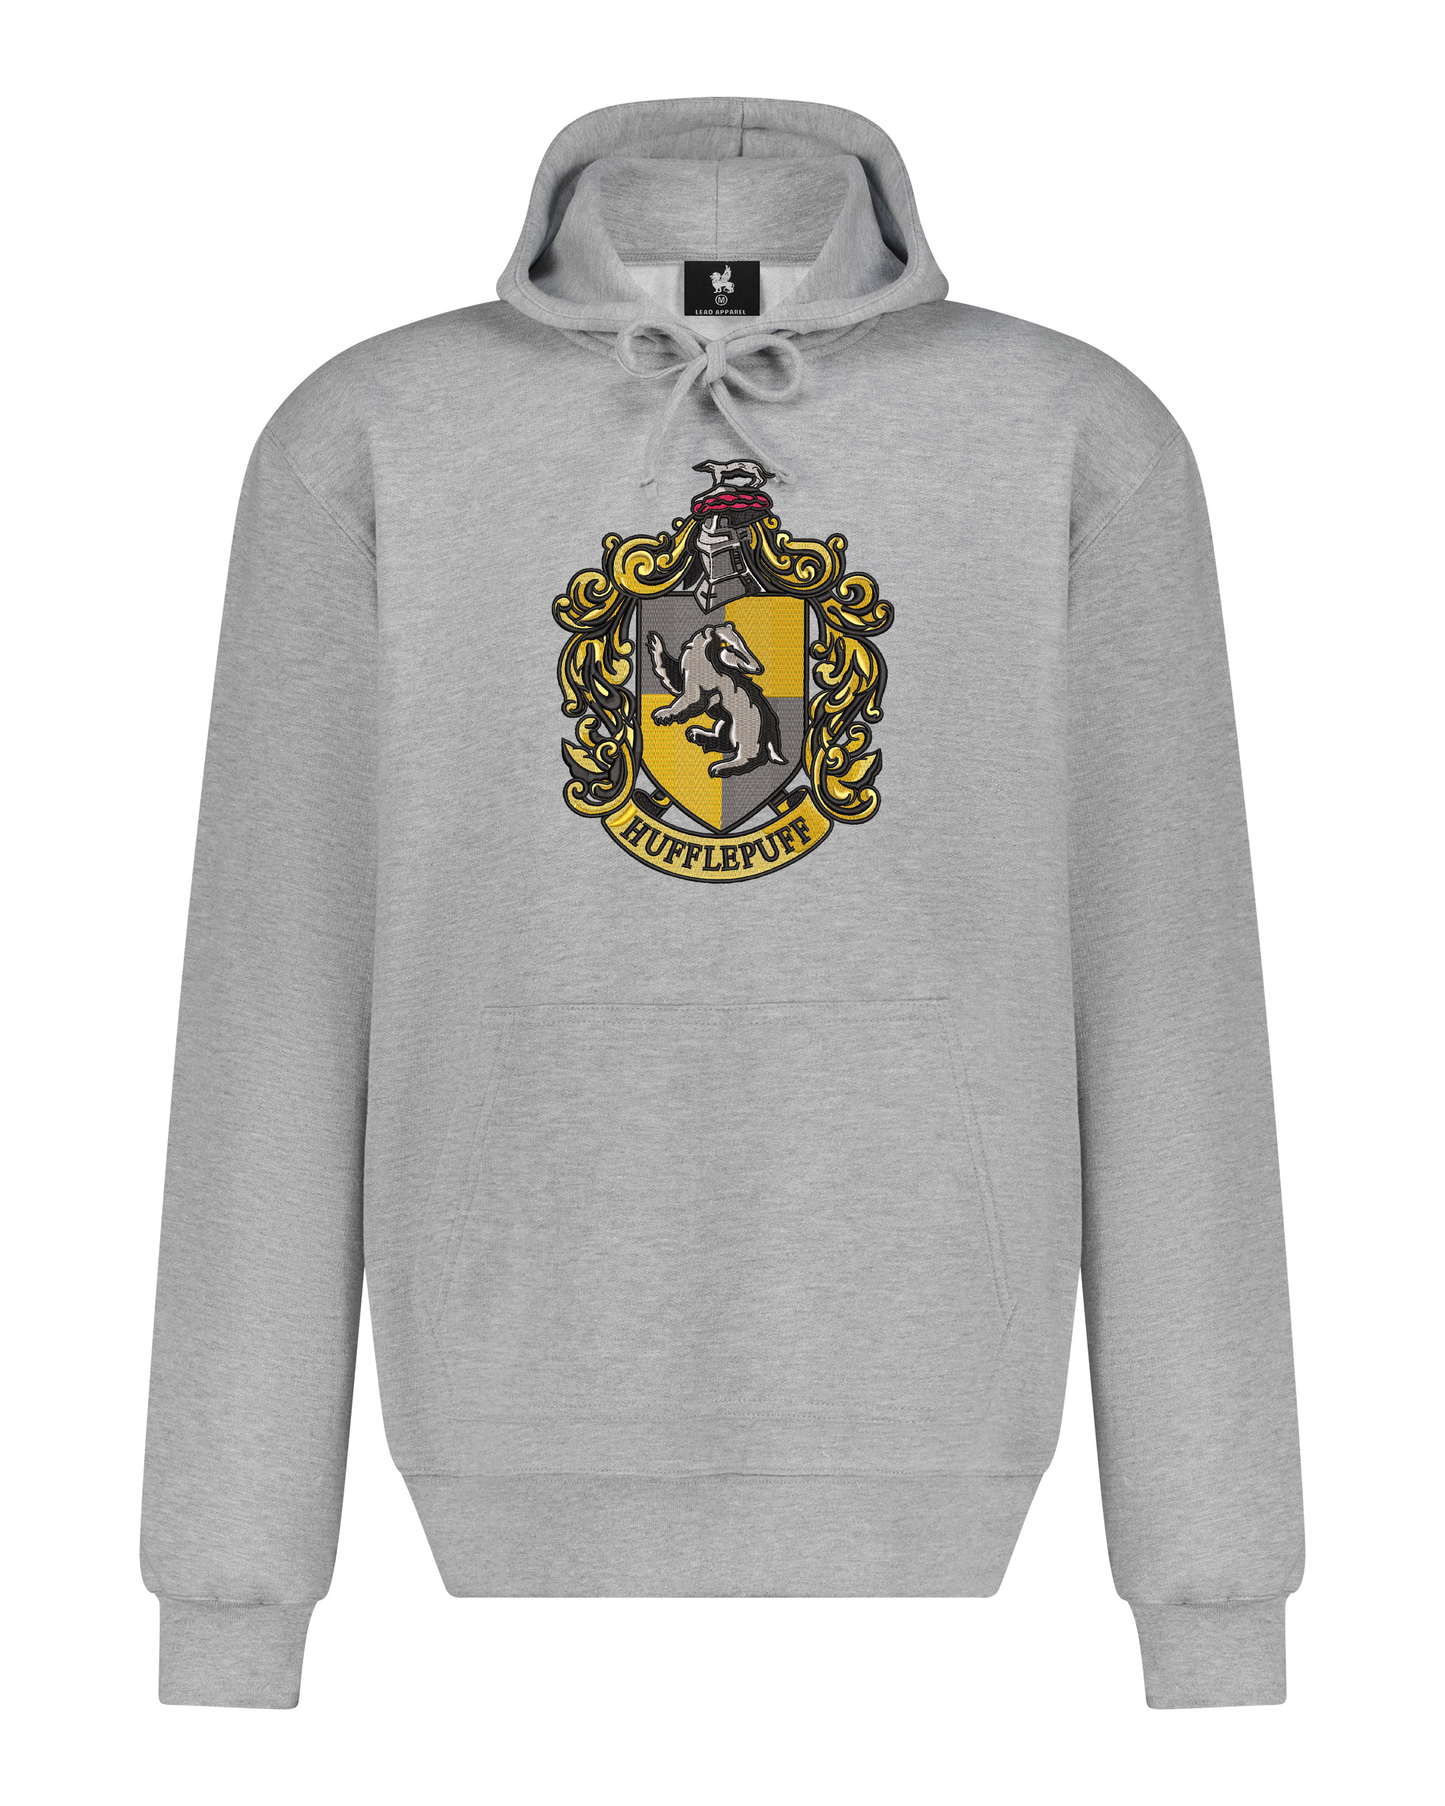 Hufflepuff House of Hogwarts School